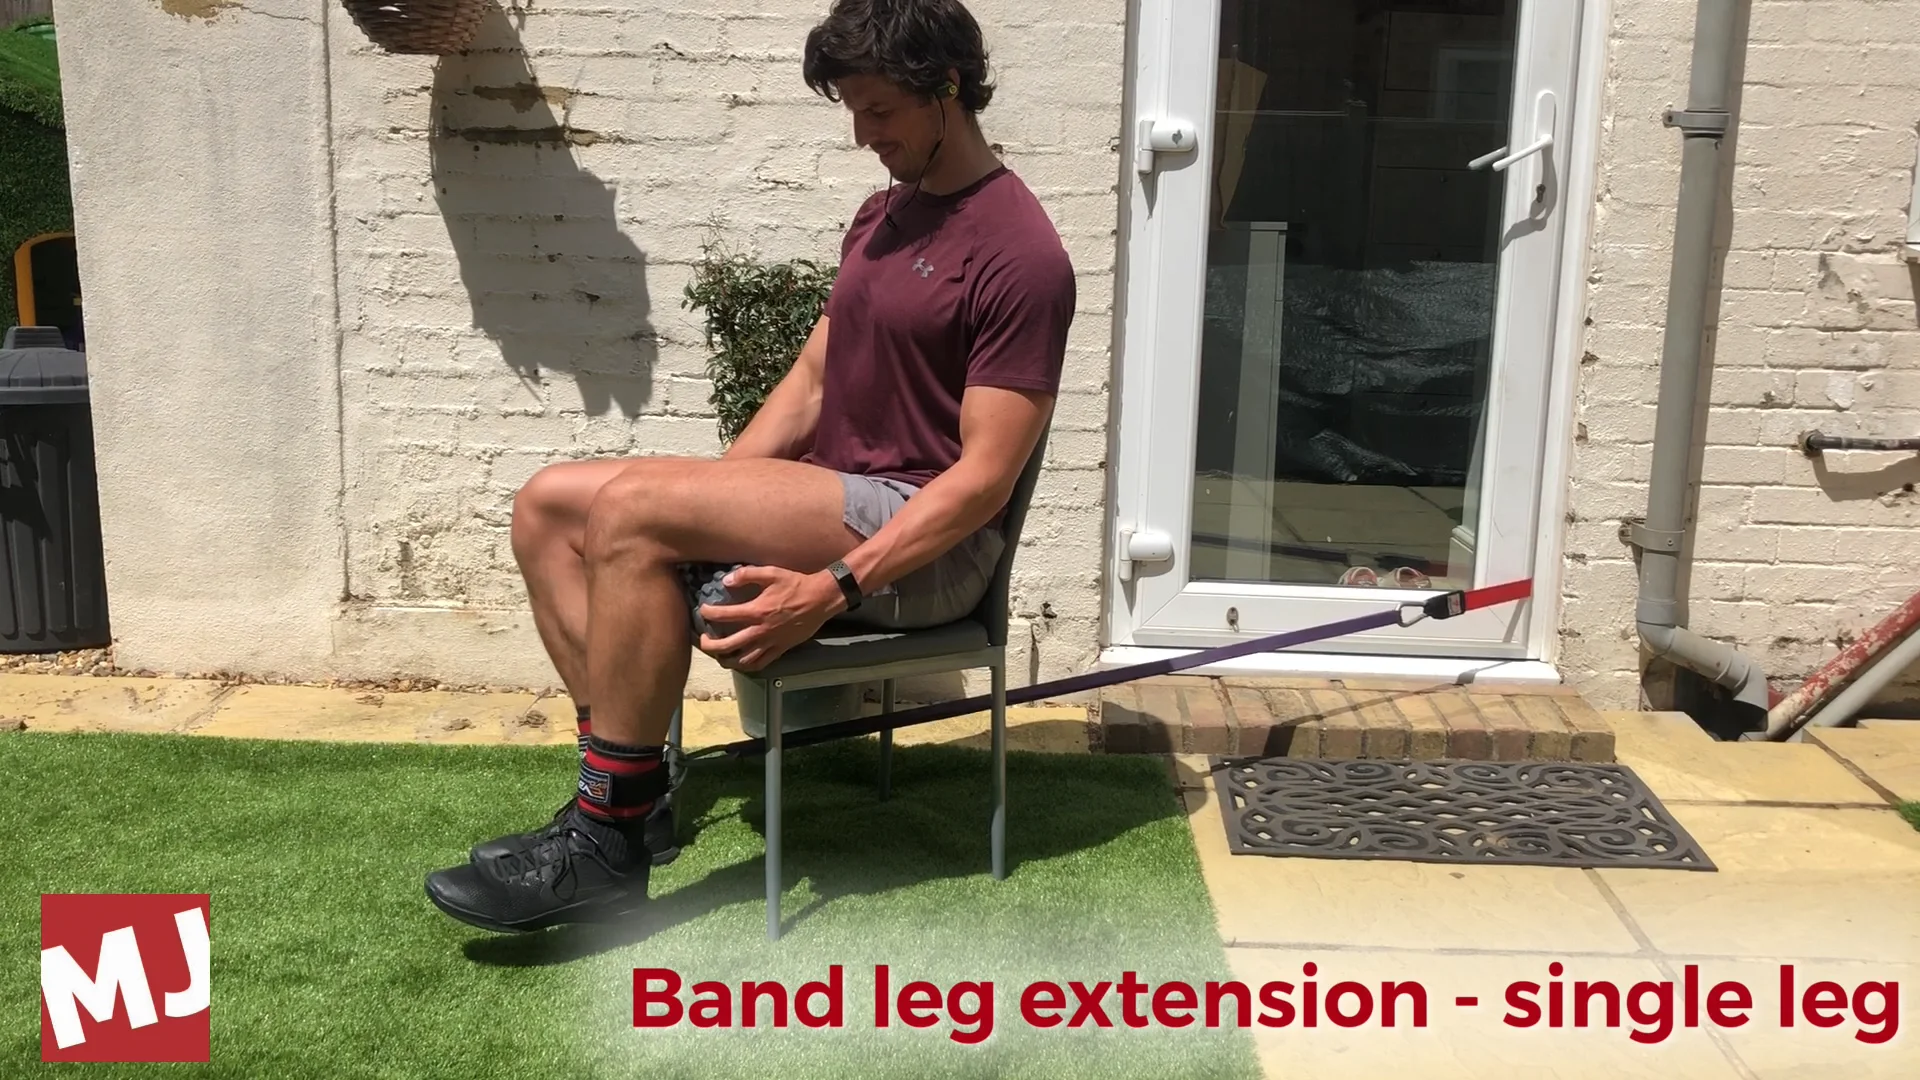 Band leg extension single leg on Vimeo